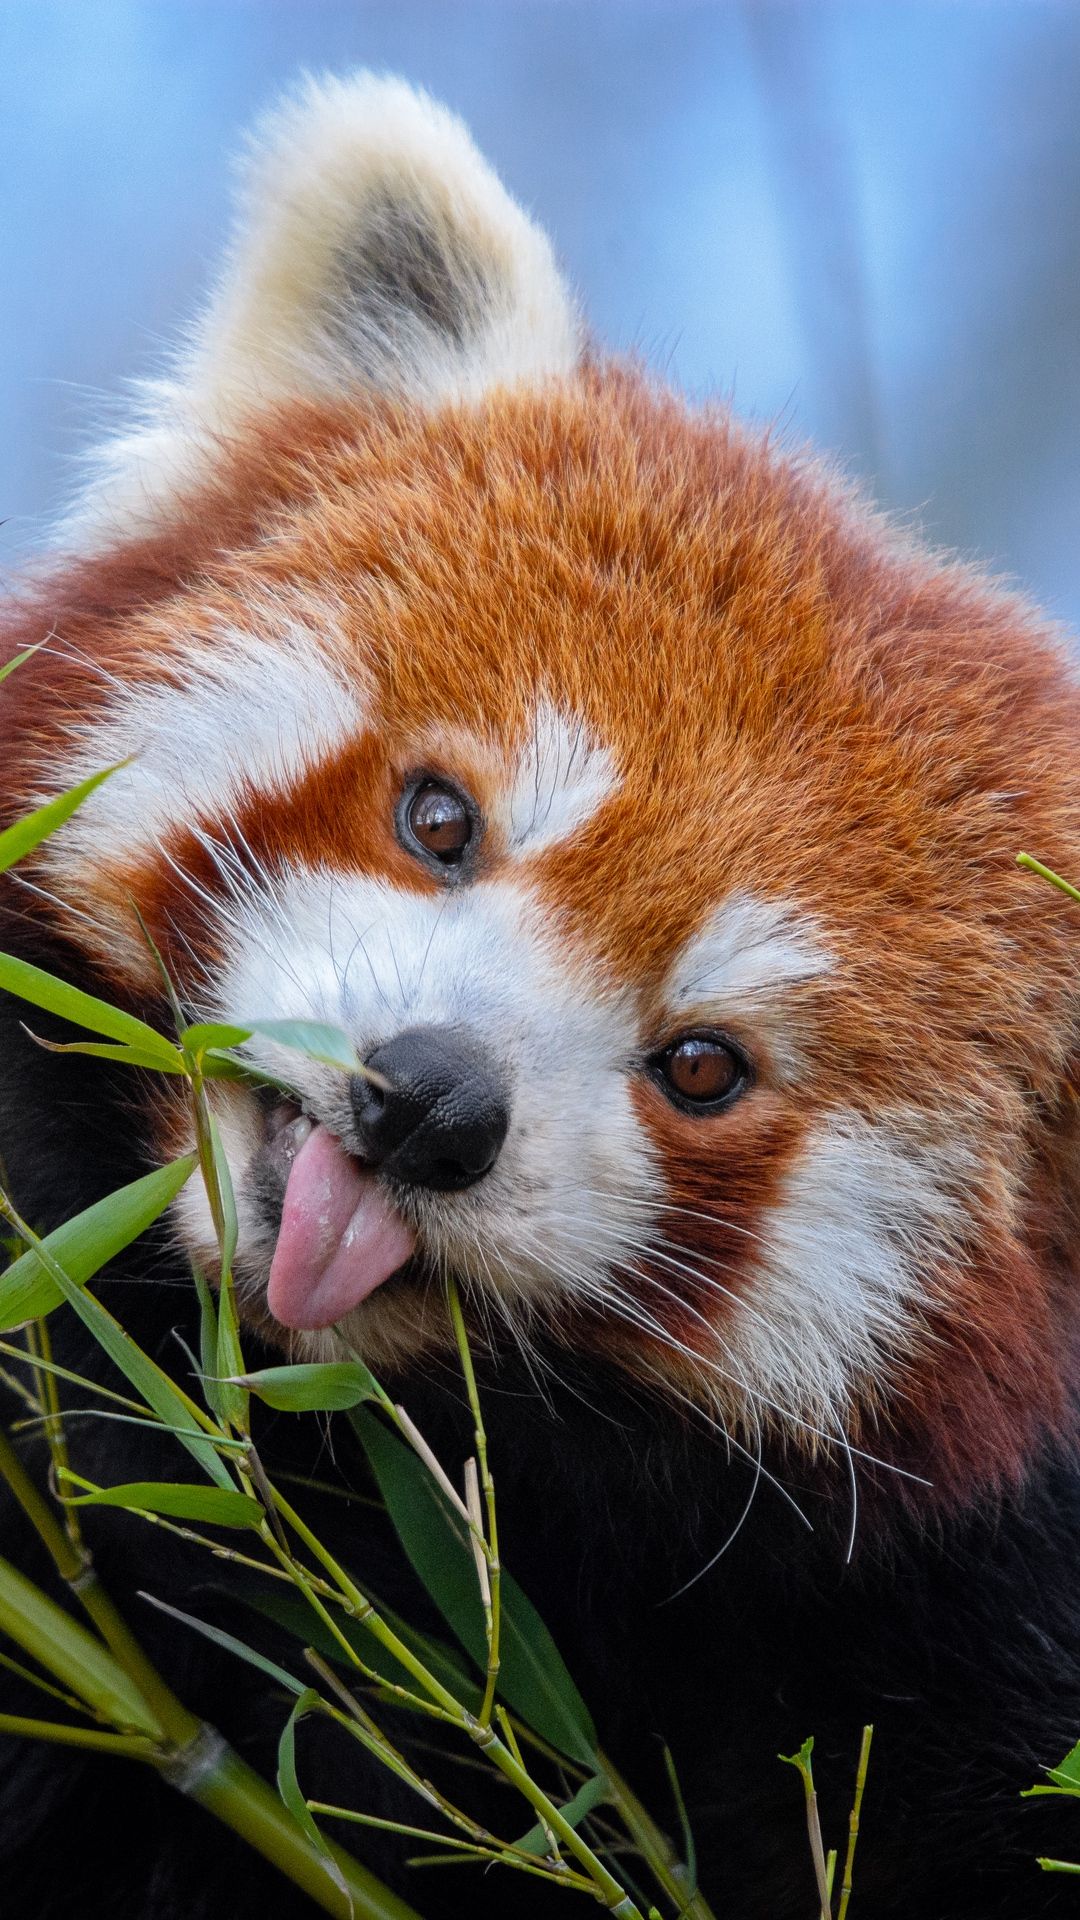 A red panda sticking out its tongue while eating bamboo - Panda